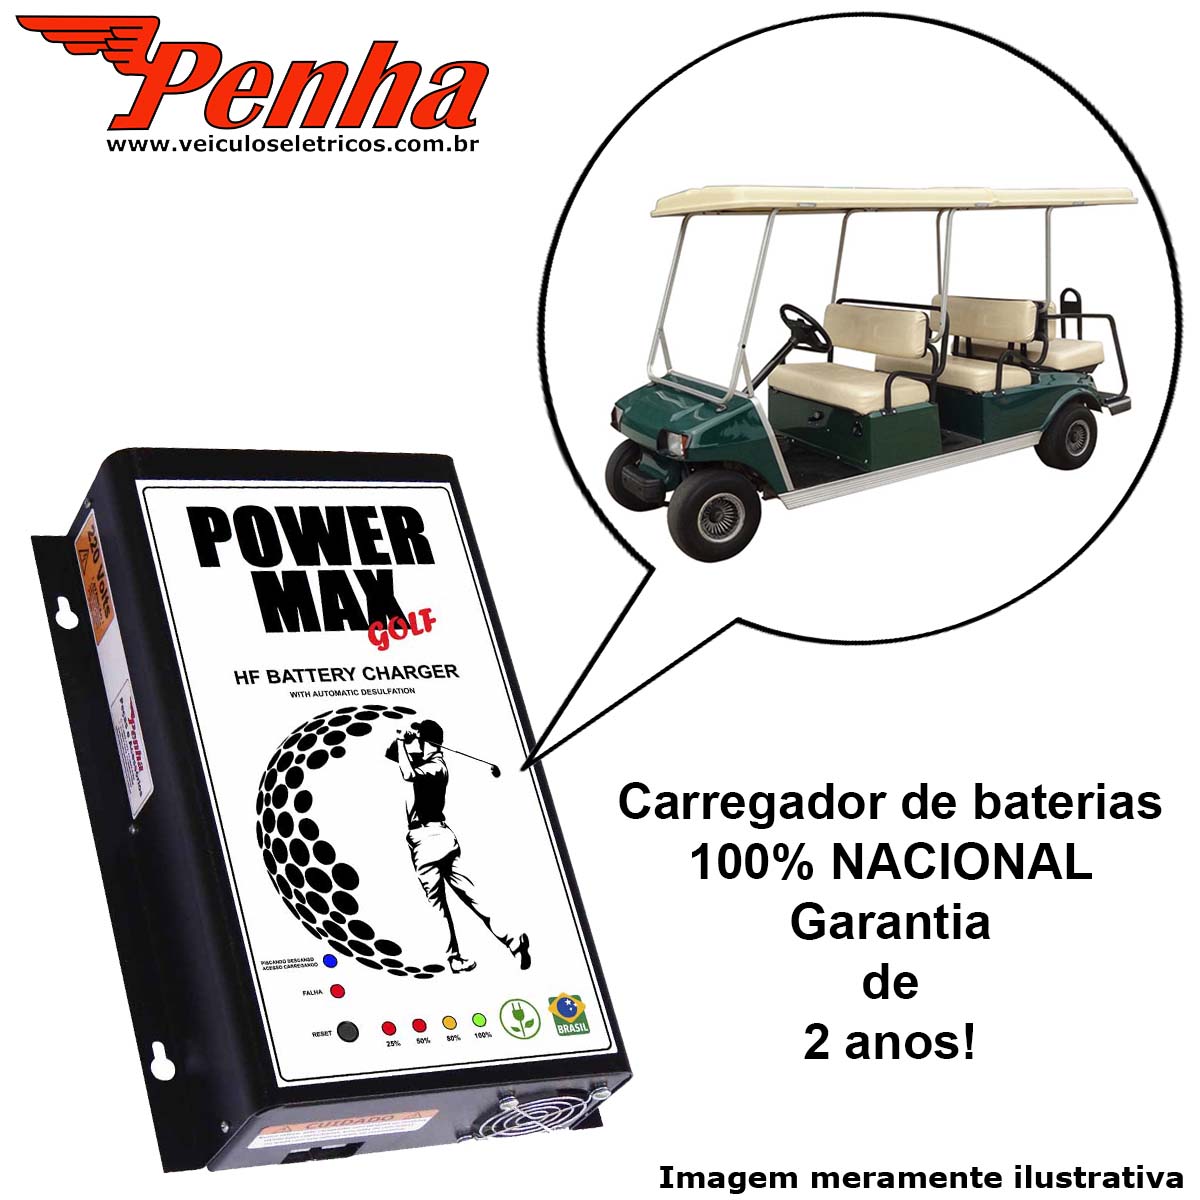 Carregador de Baterias para golf cart Club Car 48 Volts